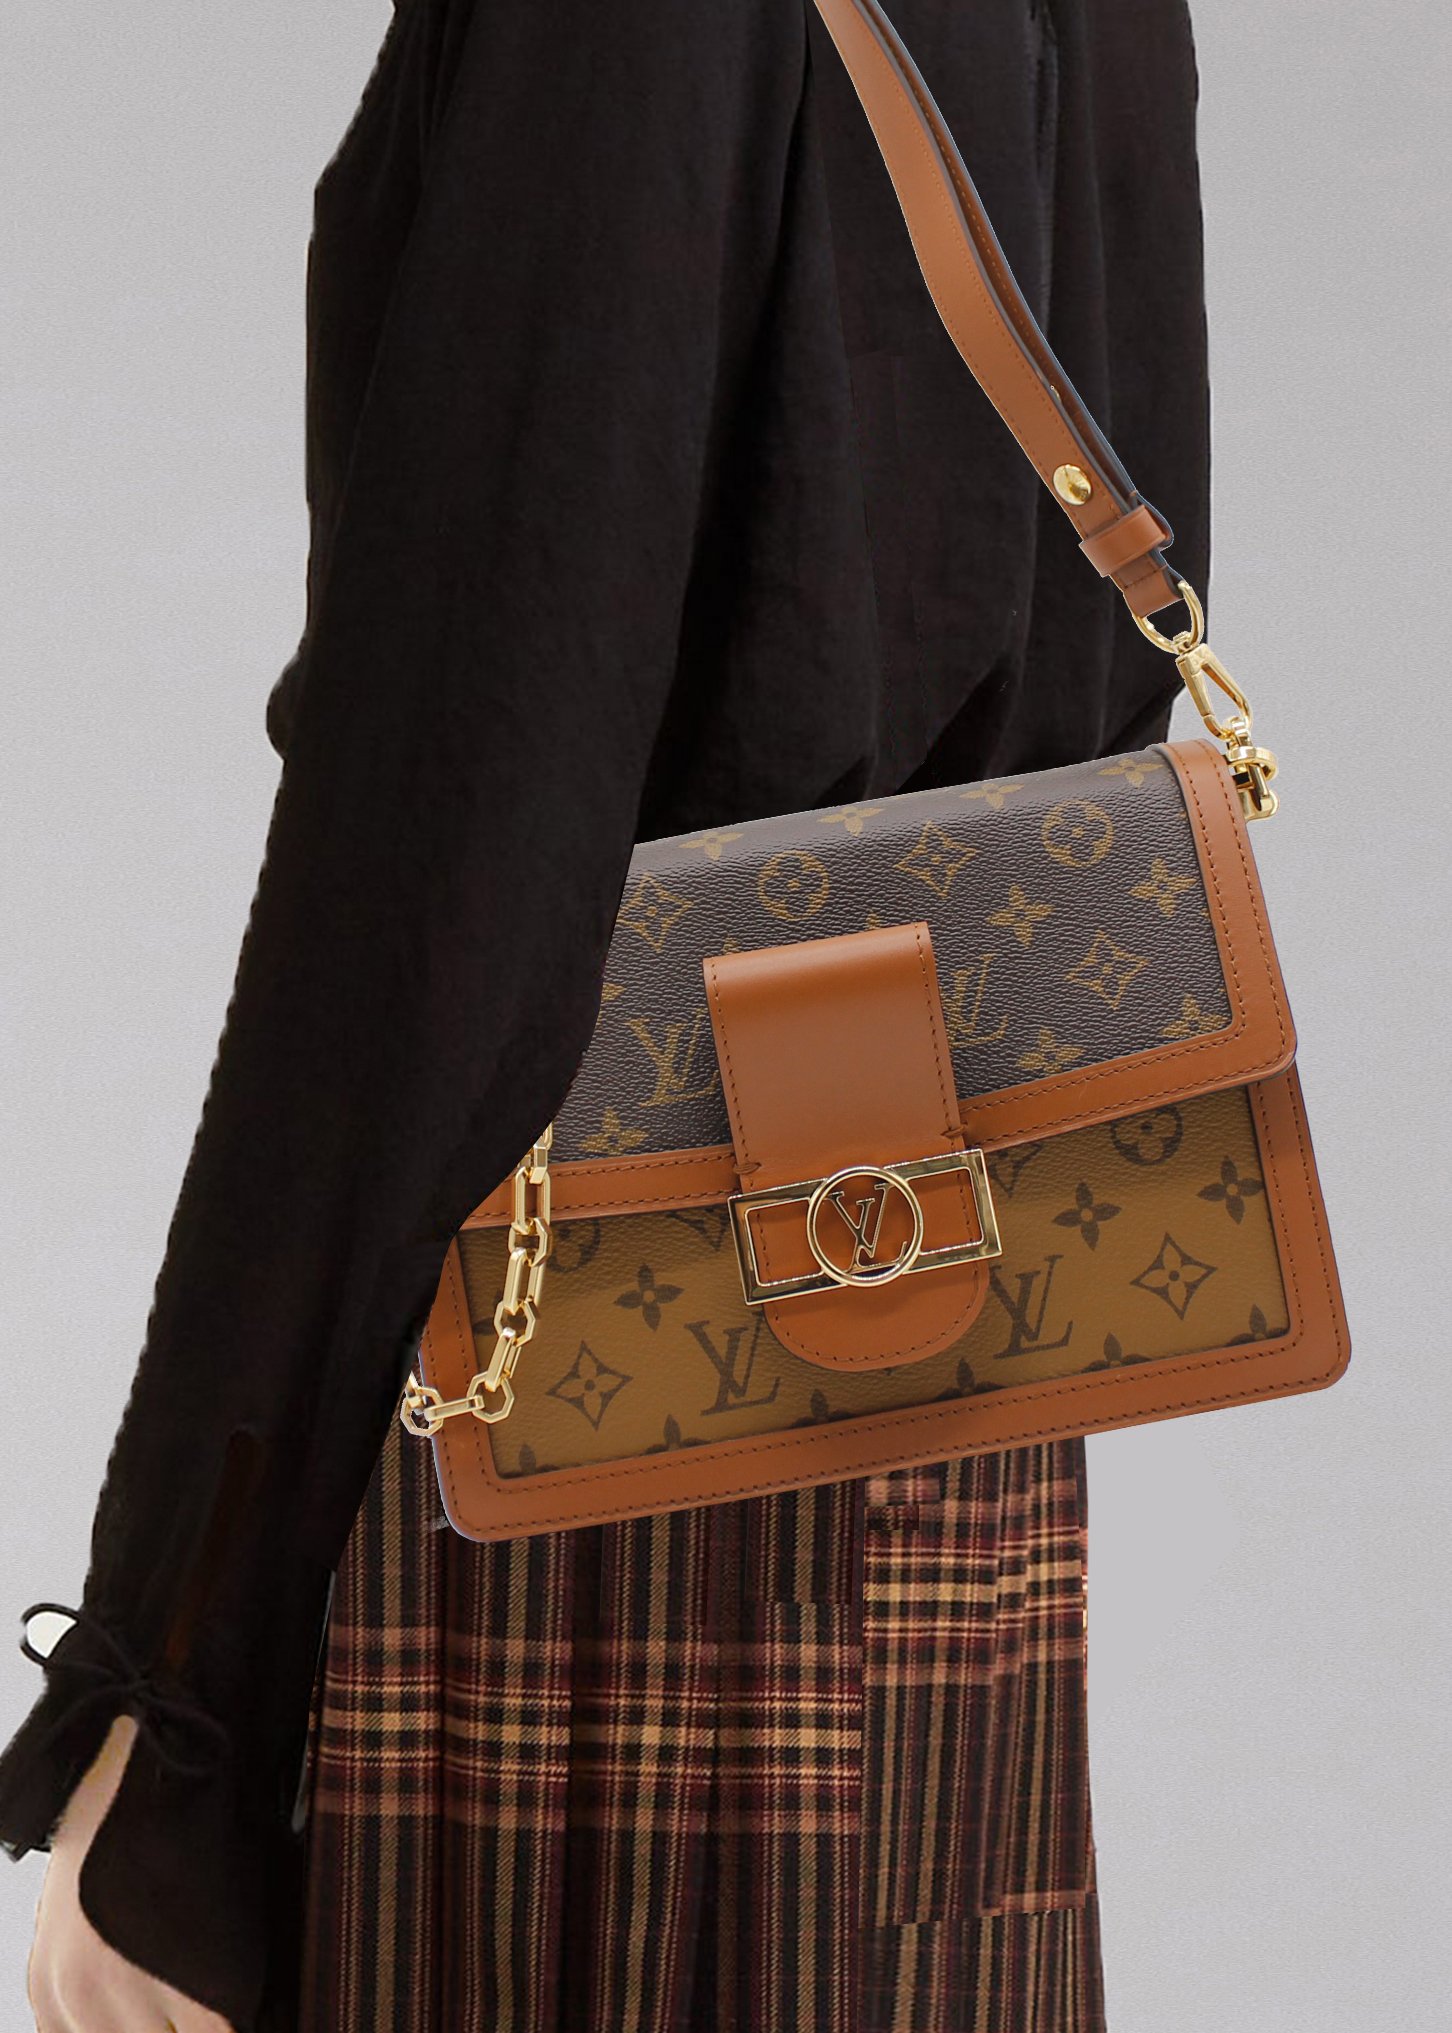 Top 5 Fashionable Handbags 2022 Worth Investing